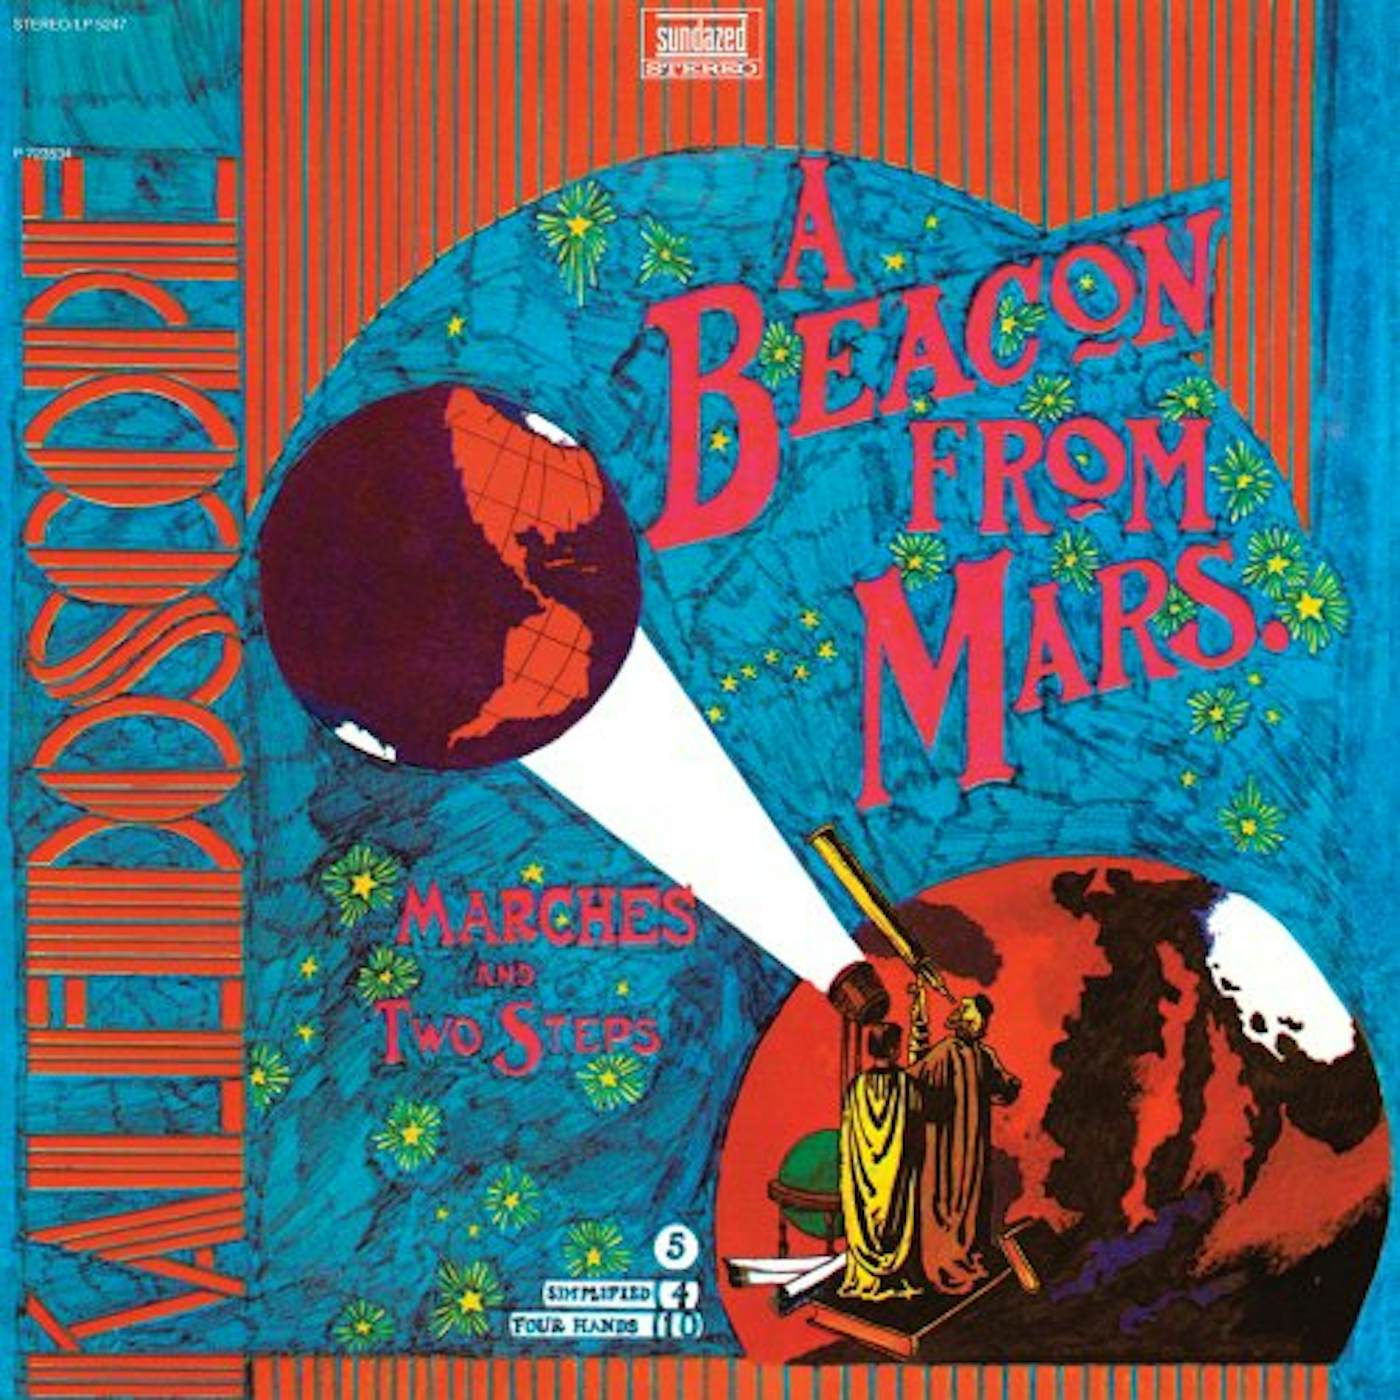 Kaleidoscope BEACON FROM MARS Vinyl Record